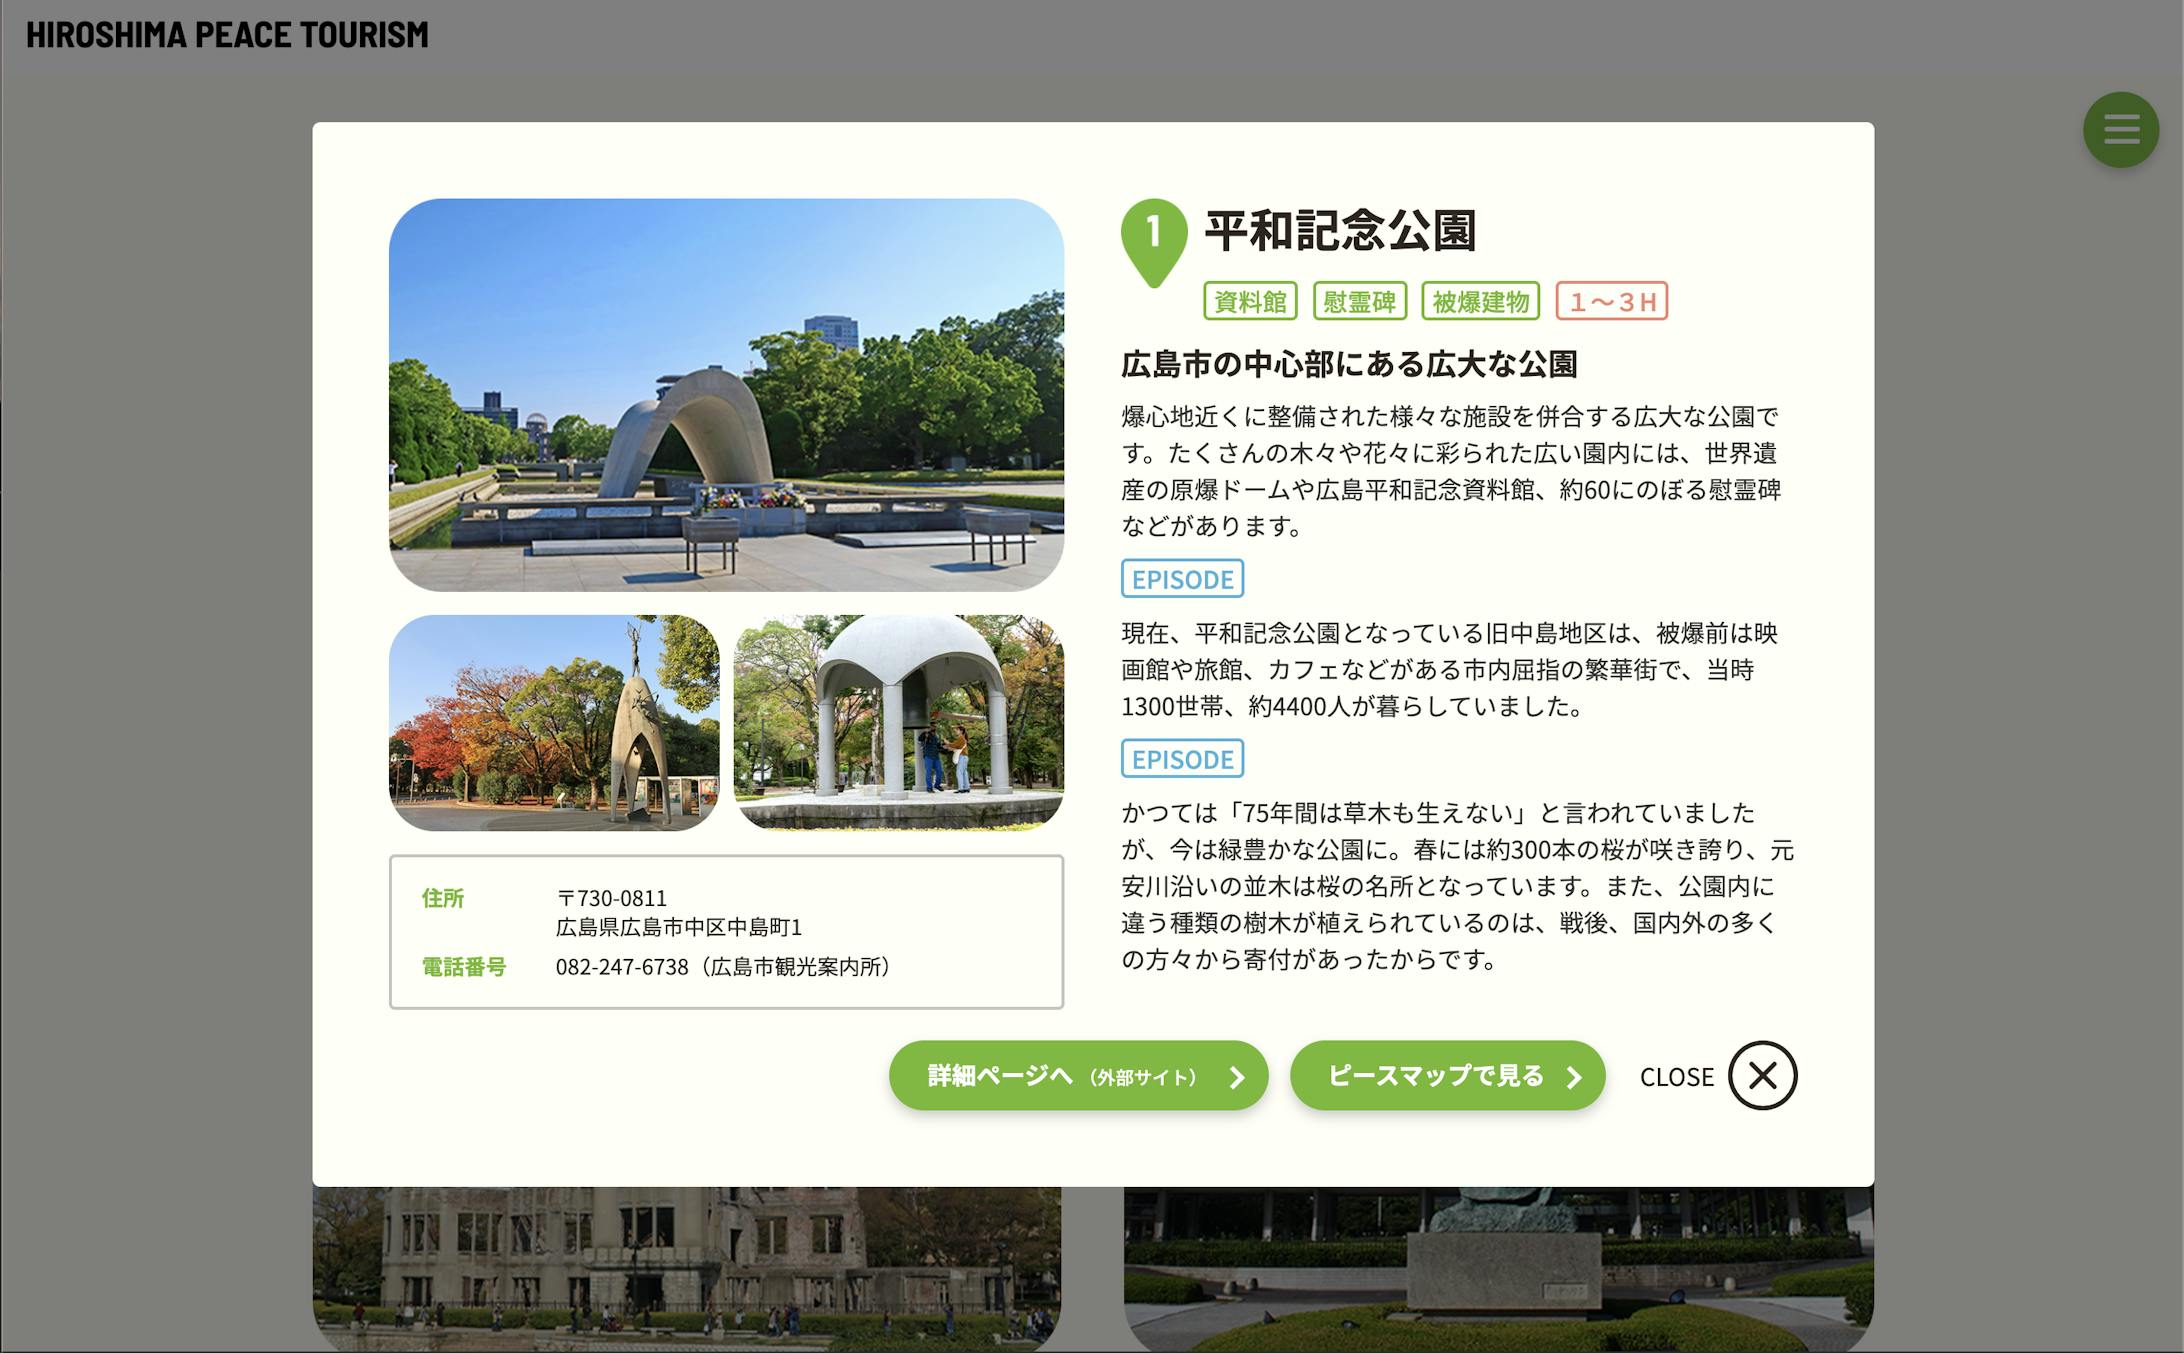 HIROSHIMA PEACE TOURISM 新規LPページ-3